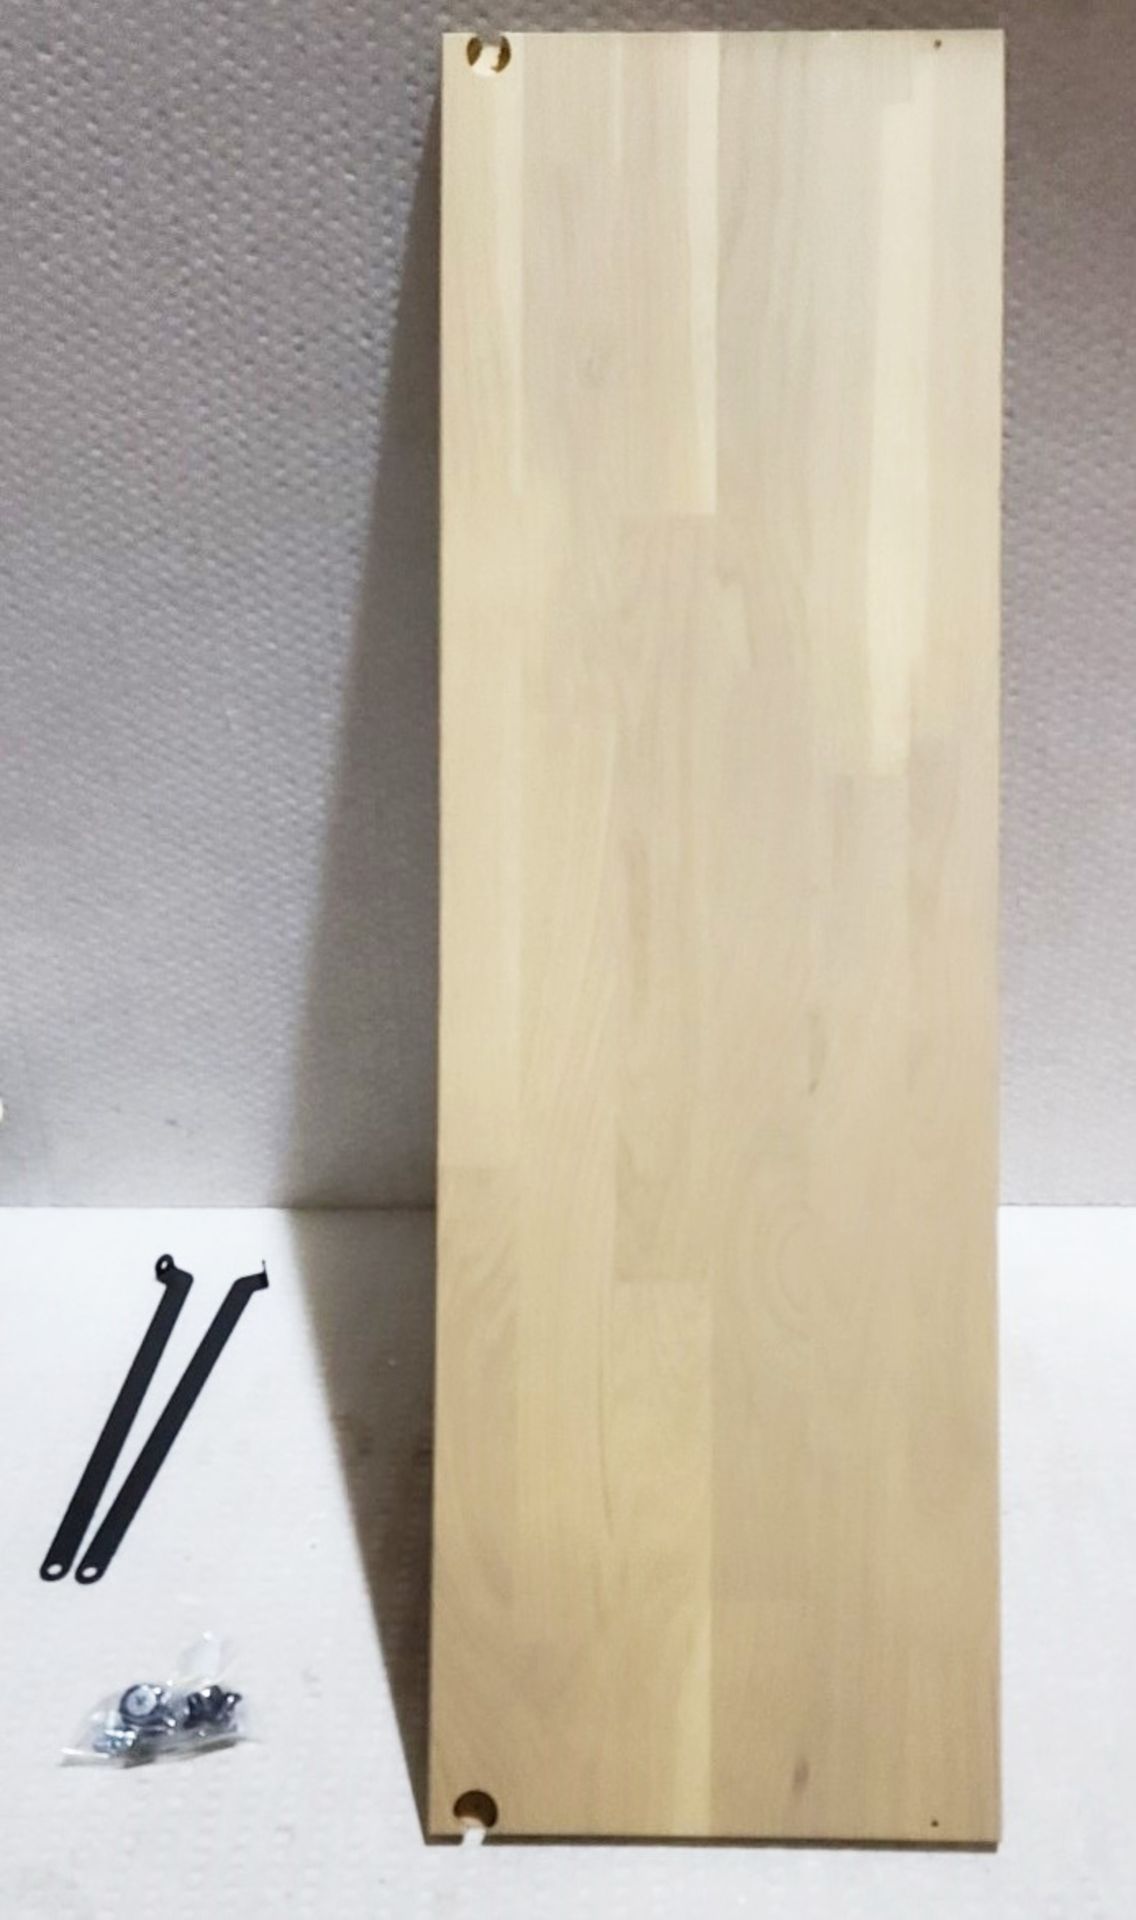 1 x WOOOD 'Gyan Legplank' Light Oak Shelf With Black Metal Braces 80cm - Image 2 of 6